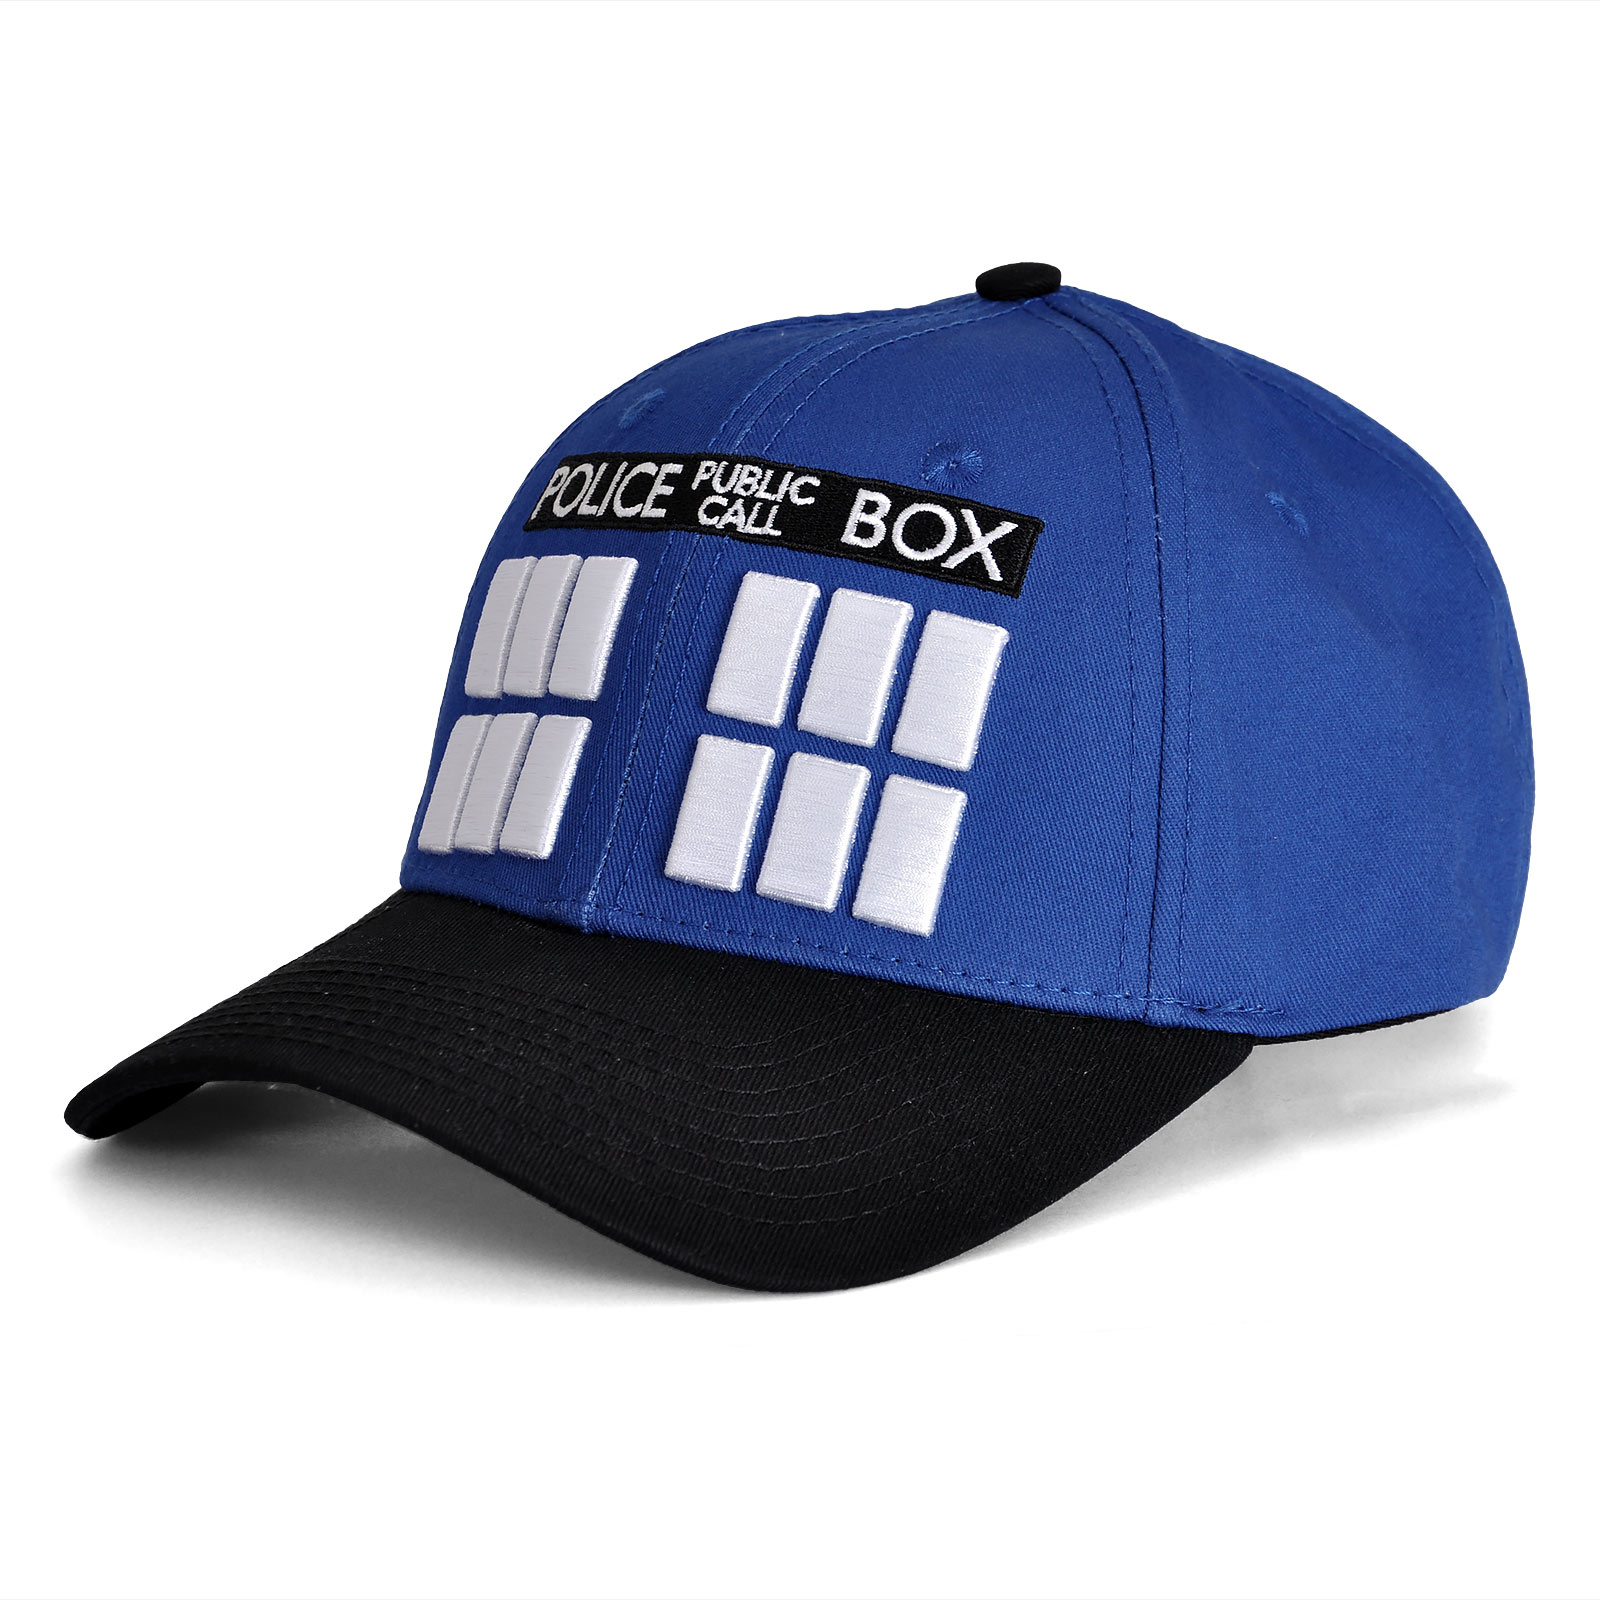 Doctor Who - Tardis Baseball Pet Blauw